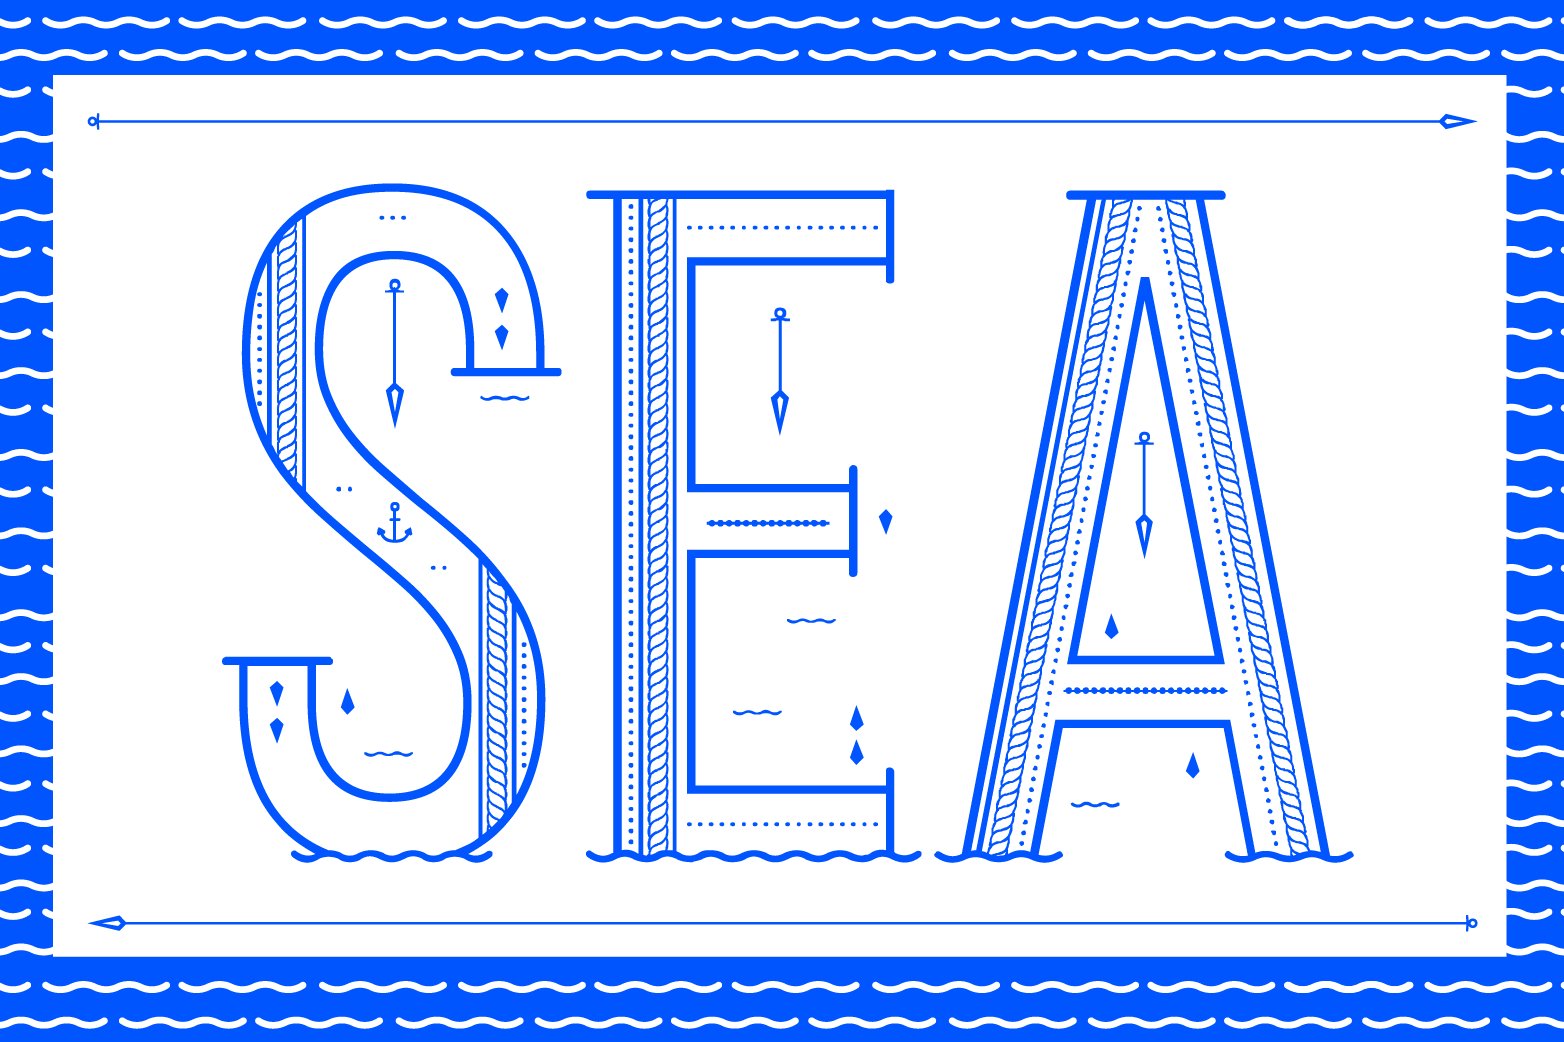 Sea Font cover image.